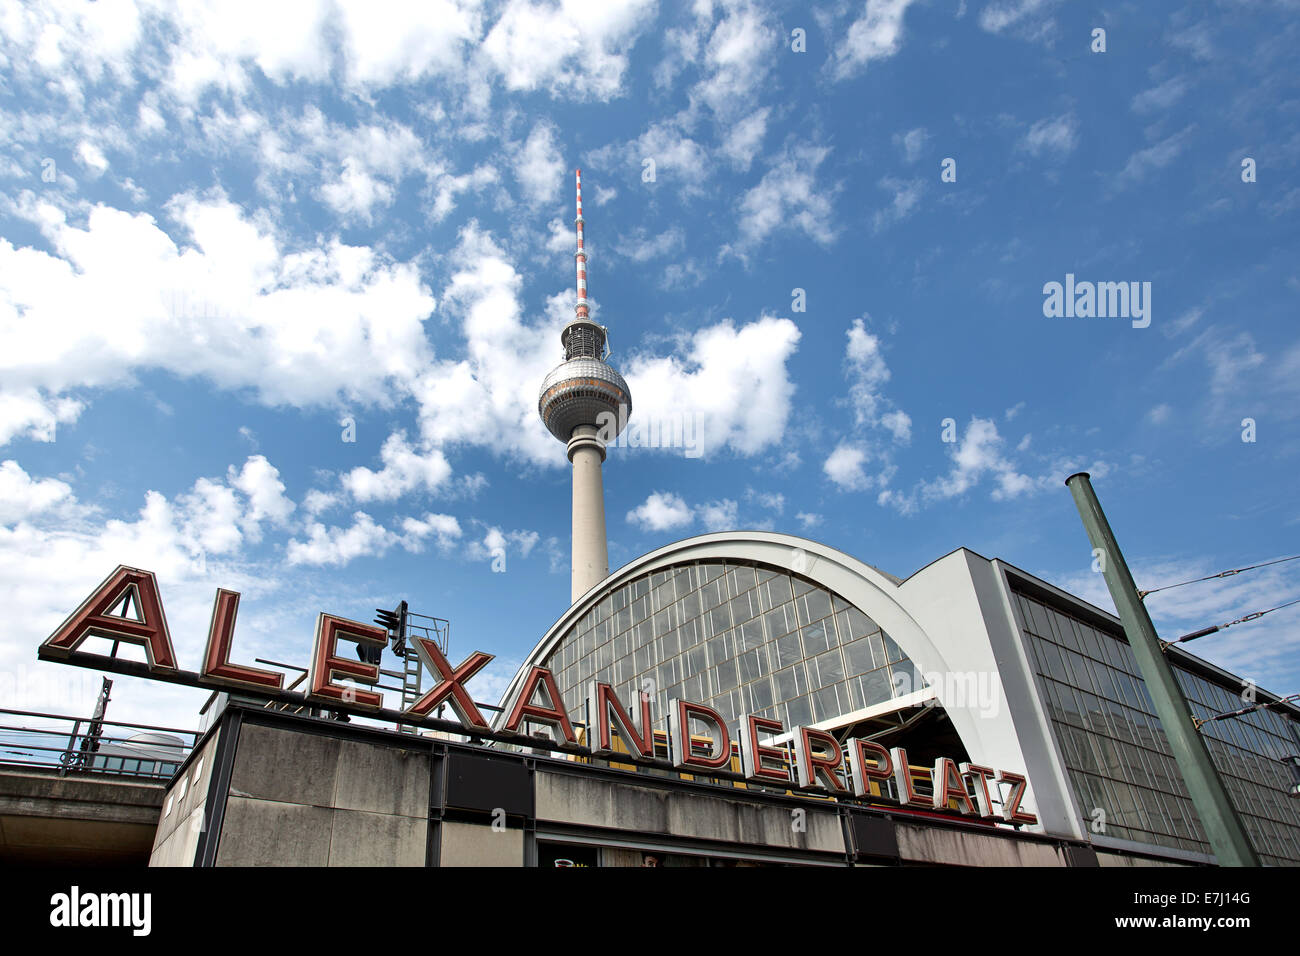 The Tv tower in Alexanderplatz, Berlin, Germany. Stock Photo